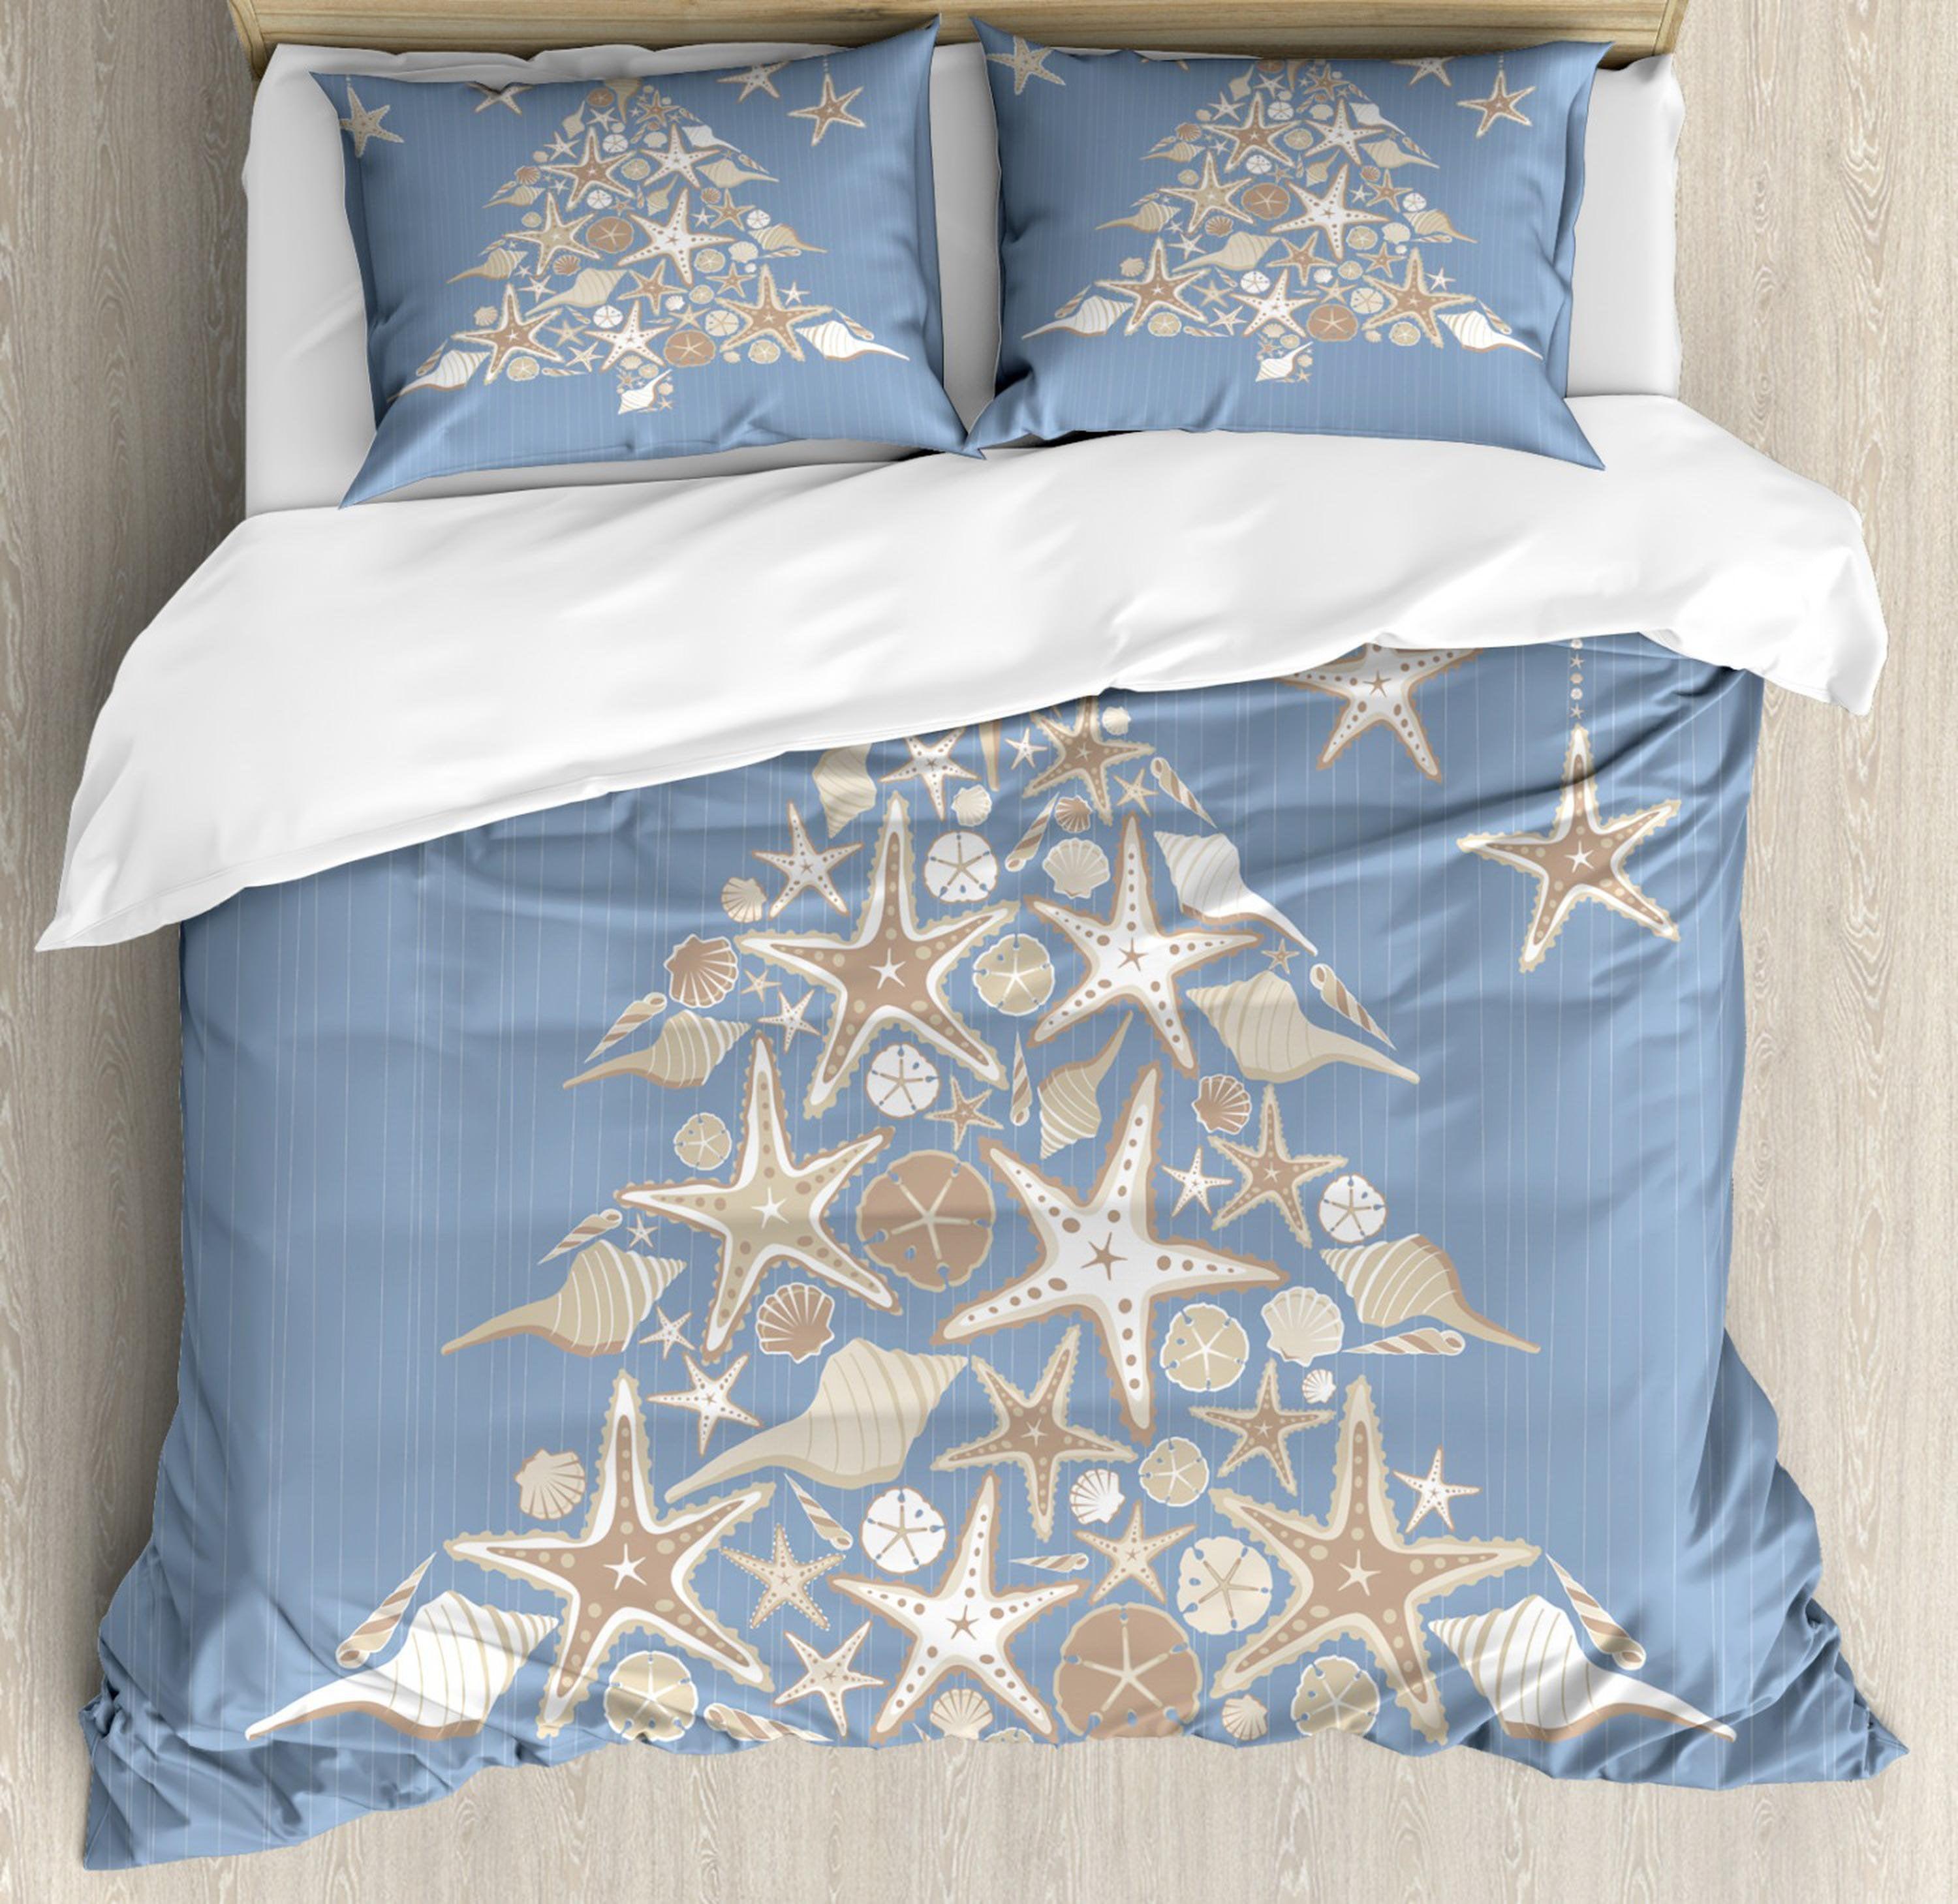 daintyduvet Coastal Grandma Christmas bedding & pillowcase holiday gift blue duvet cover king queen toddler bedding baby Christmas farmhouse decor